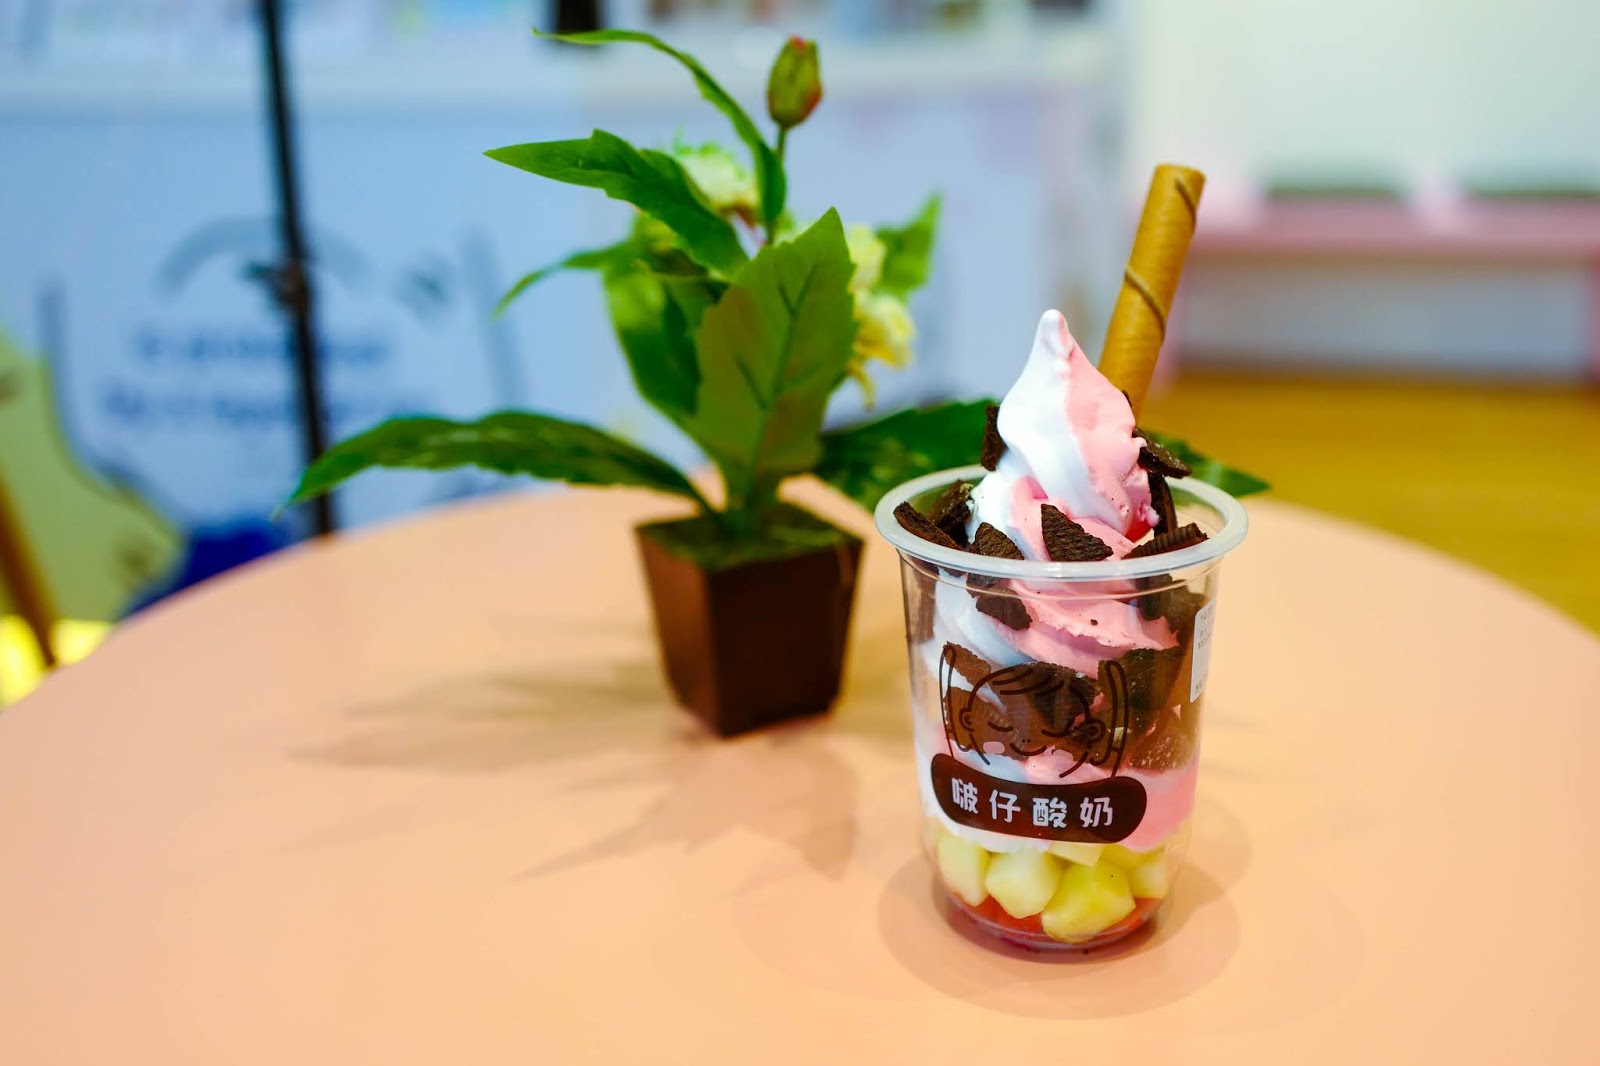 yees yogurt: new branch in sri petaling, ice cream series & matcha drinks